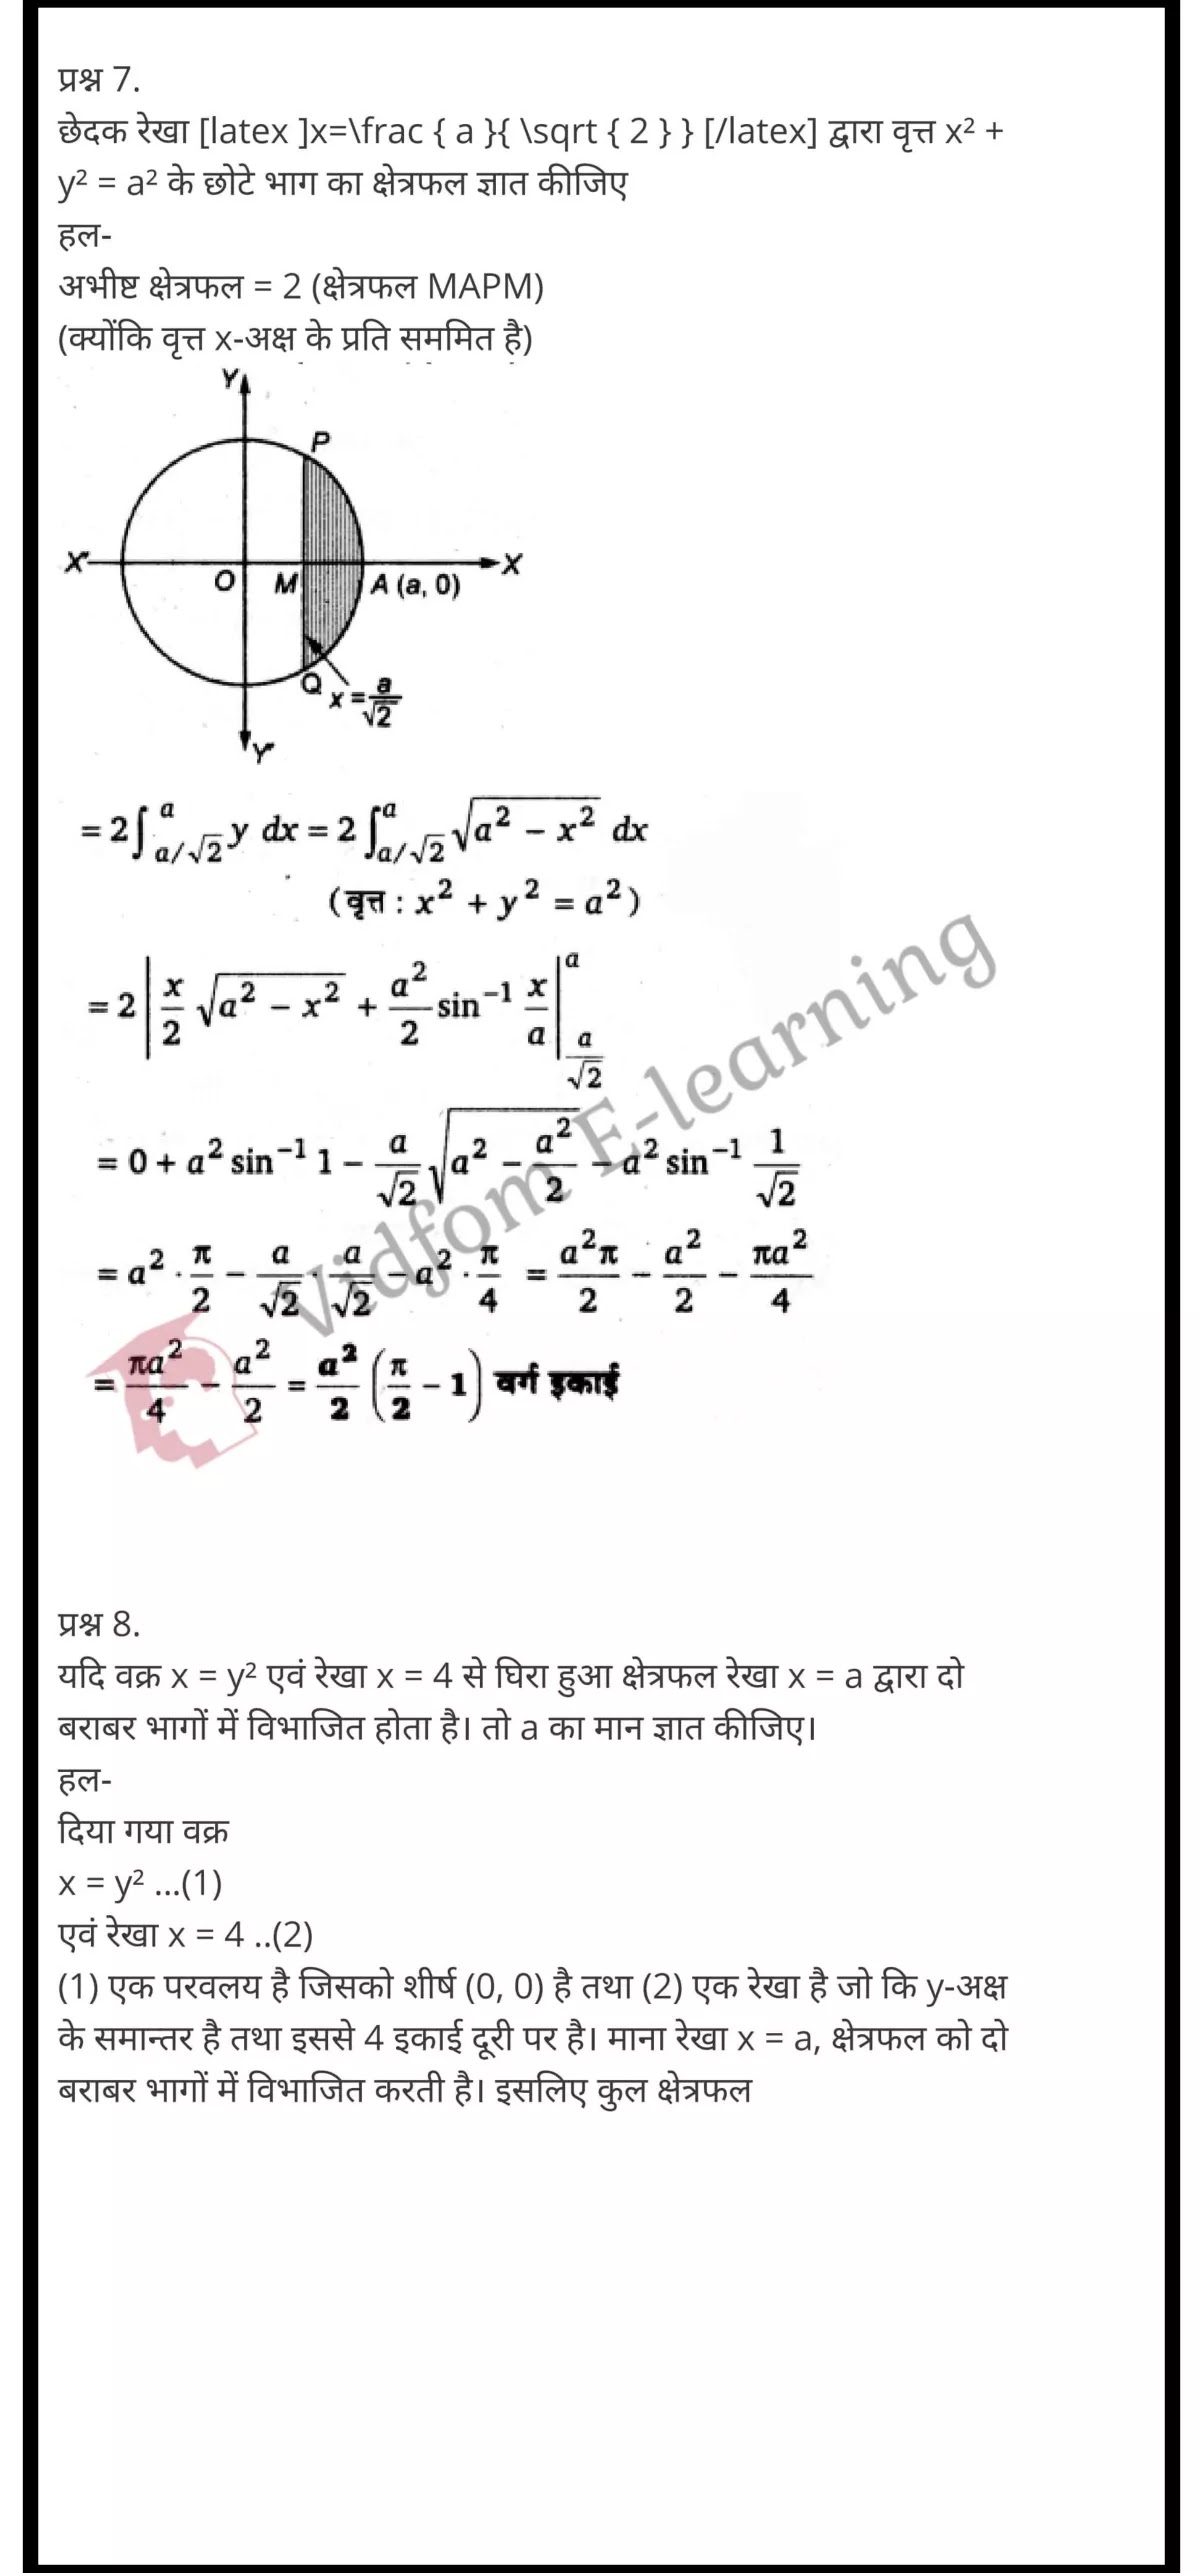 कक्षा 12 गणित  के नोट्स  हिंदी में एनसीईआरटी समाधान,     class 12 Maths Chapter 8,   class 12 Maths Chapter 8 ncert solutions in Hindi,   class 12 Maths Chapter 8 notes in hindi,   class 12 Maths Chapter 8 question answer,   class 12 Maths Chapter 8 notes,   class 12 Maths Chapter 8 class 12 Maths Chapter 8 in  hindi,    class 12 Maths Chapter 8 important questions in  hindi,   class 12 Maths Chapter 8 notes in hindi,    class 12 Maths Chapter 8 test,   class 12 Maths Chapter 8 pdf,   class 12 Maths Chapter 8 notes pdf,   class 12 Maths Chapter 8 exercise solutions,   class 12 Maths Chapter 8 notes study rankers,   class 12 Maths Chapter 8 notes,    class 12 Maths Chapter 8  class 12  notes pdf,   class 12 Maths Chapter 8 class 12  notes  ncert,   class 12 Maths Chapter 8 class 12 pdf,   class 12 Maths Chapter 8  book,   class 12 Maths Chapter 8 quiz class 12  ,    10  th class 12 Maths Chapter 8  book up board,   up board 10  th class 12 Maths Chapter 8 notes,  class 12 Maths,   class 12 Maths ncert solutions in Hindi,   class 12 Maths notes in hindi,   class 12 Maths question answer,   class 12 Maths notes,  class 12 Maths class 12 Maths Chapter 8 in  hindi,    class 12 Maths important questions in  hindi,   class 12 Maths notes in hindi,    class 12 Maths test,  class 12 Maths class 12 Maths Chapter 8 pdf,   class 12 Maths notes pdf,   class 12 Maths exercise solutions,   class 12 Maths,  class 12 Maths notes study rankers,   class 12 Maths notes,  class 12 Maths notes,   class 12 Maths  class 12  notes pdf,   class 12 Maths class 12  notes  ncert,   class 12 Maths class 12 pdf,   class 12 Maths  book,  class 12 Maths quiz class 12  ,  10  th class 12 Maths    book up board,    up board 10  th class 12 Maths notes,      कक्षा 12 गणित अध्याय 8 ,  कक्षा 12 गणित, कक्षा 12 गणित अध्याय 8  के नोट्स हिंदी में,  कक्षा 12 का हिंदी अध्याय 8 का प्रश्न उत्तर,  कक्षा 12 गणित अध्याय 8  के नोट्स,  10 कक्षा गणित  हिंदी में, कक्षा 12 गणित अध्याय 8  हिंदी में,  कक्षा 12 गणित अध्याय 8  महत्वपूर्ण प्रश्न हिंदी में, कक्षा 12   हिंदी के नोट्स  हिंदी में, गणित हिंदी में  कक्षा 12 नोट्स pdf,    गणित हिंदी में  कक्षा 12 नोट्स 2021 ncert,   गणित हिंदी  कक्षा 12 pdf,   गणित हिंदी में  पुस्तक,   गणित हिंदी में की बुक,   गणित हिंदी में  प्रश्नोत्तरी class 12 ,  बिहार बोर्ड   पुस्तक 12वीं हिंदी नोट्स,    गणित कक्षा 12 नोट्स 2021 ncert,   गणित  कक्षा 12 pdf,   गणित  पुस्तक,   गणित  प्रश्नोत्तरी class 12, कक्षा 12 गणित,  कक्षा 12 गणित  के नोट्स हिंदी में,  कक्षा 12 का हिंदी का प्रश्न उत्तर,  कक्षा 12 गणित  के नोट्स,  10 कक्षा हिंदी 2021  हिंदी में, कक्षा 12 गणित  हिंदी में,  कक्षा 12 गणित  महत्वपूर्ण प्रश्न हिंदी में, कक्षा 12 गणित  नोट्स  हिंदी में,